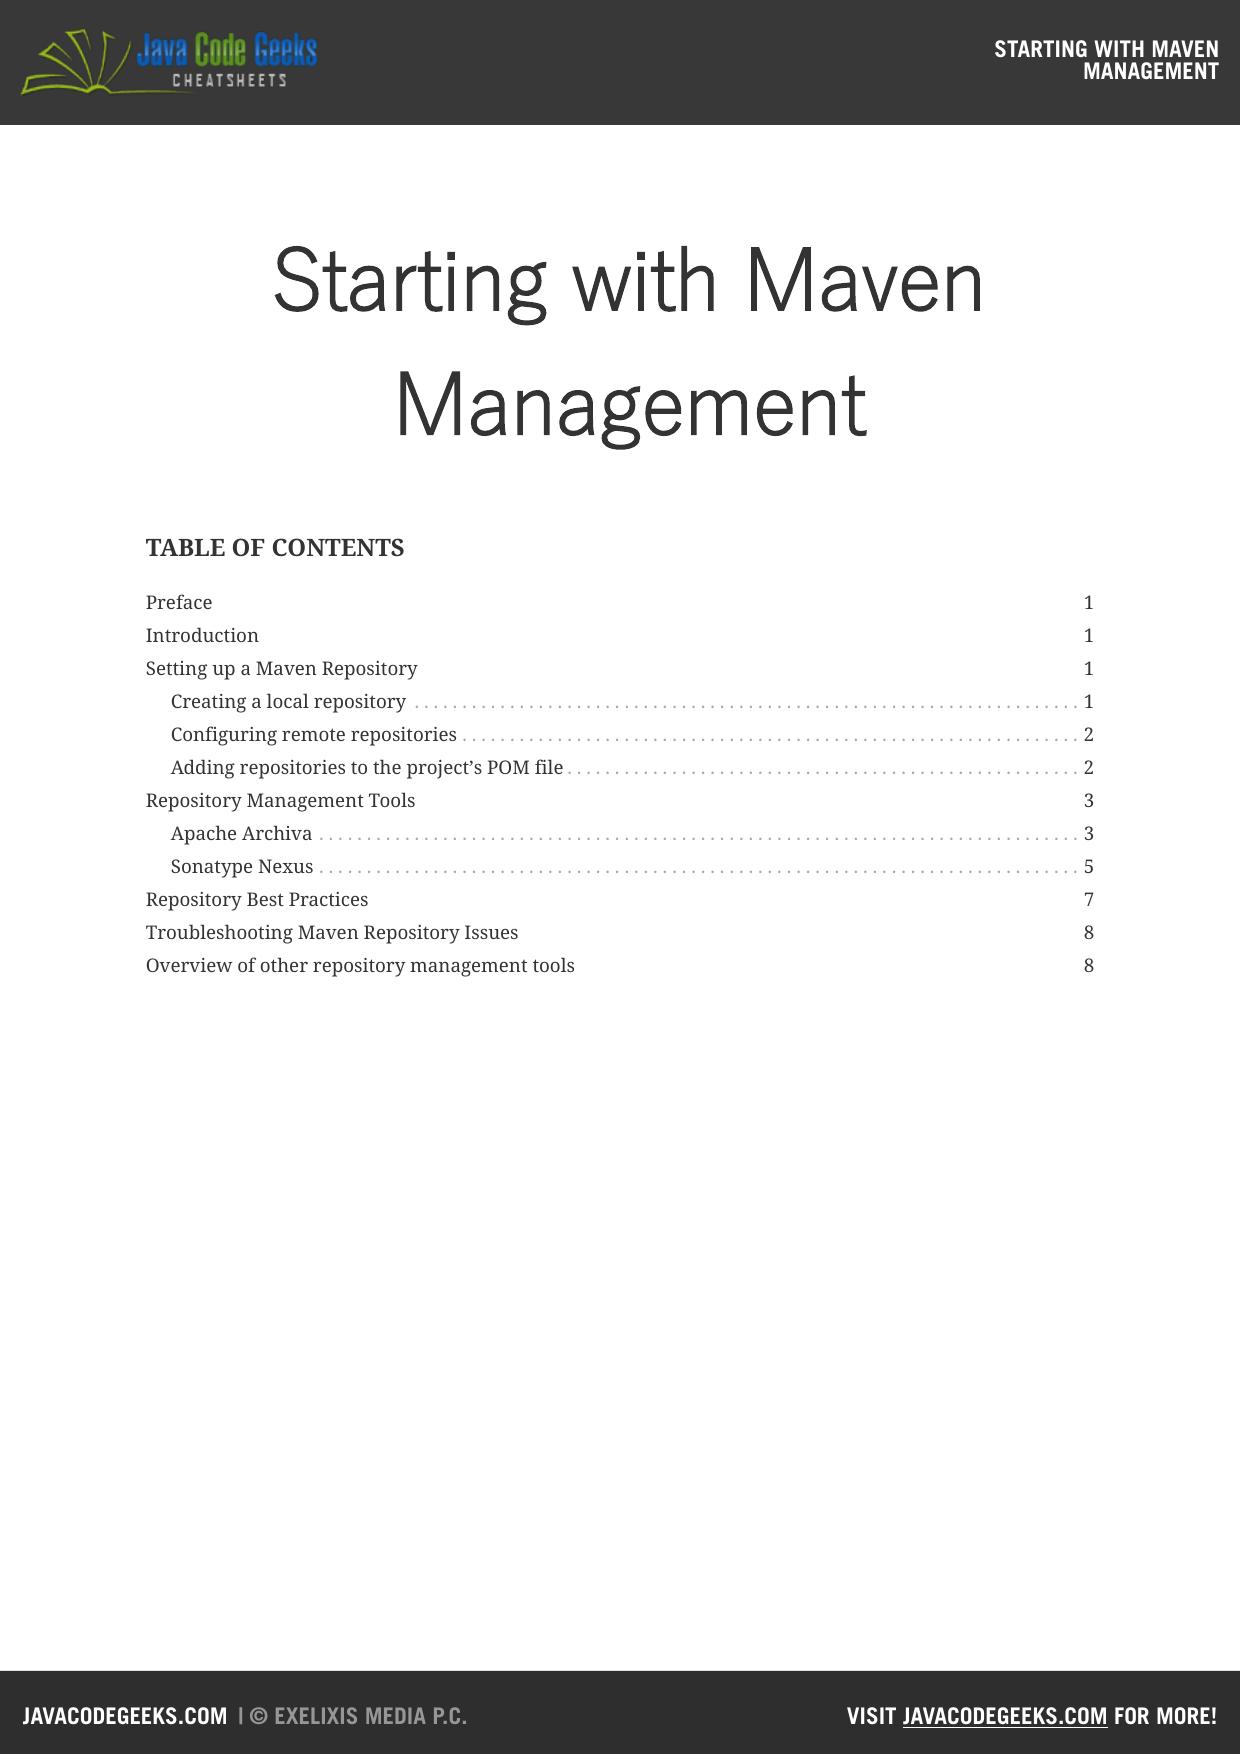 Starting with Maven Management Cheatsheet